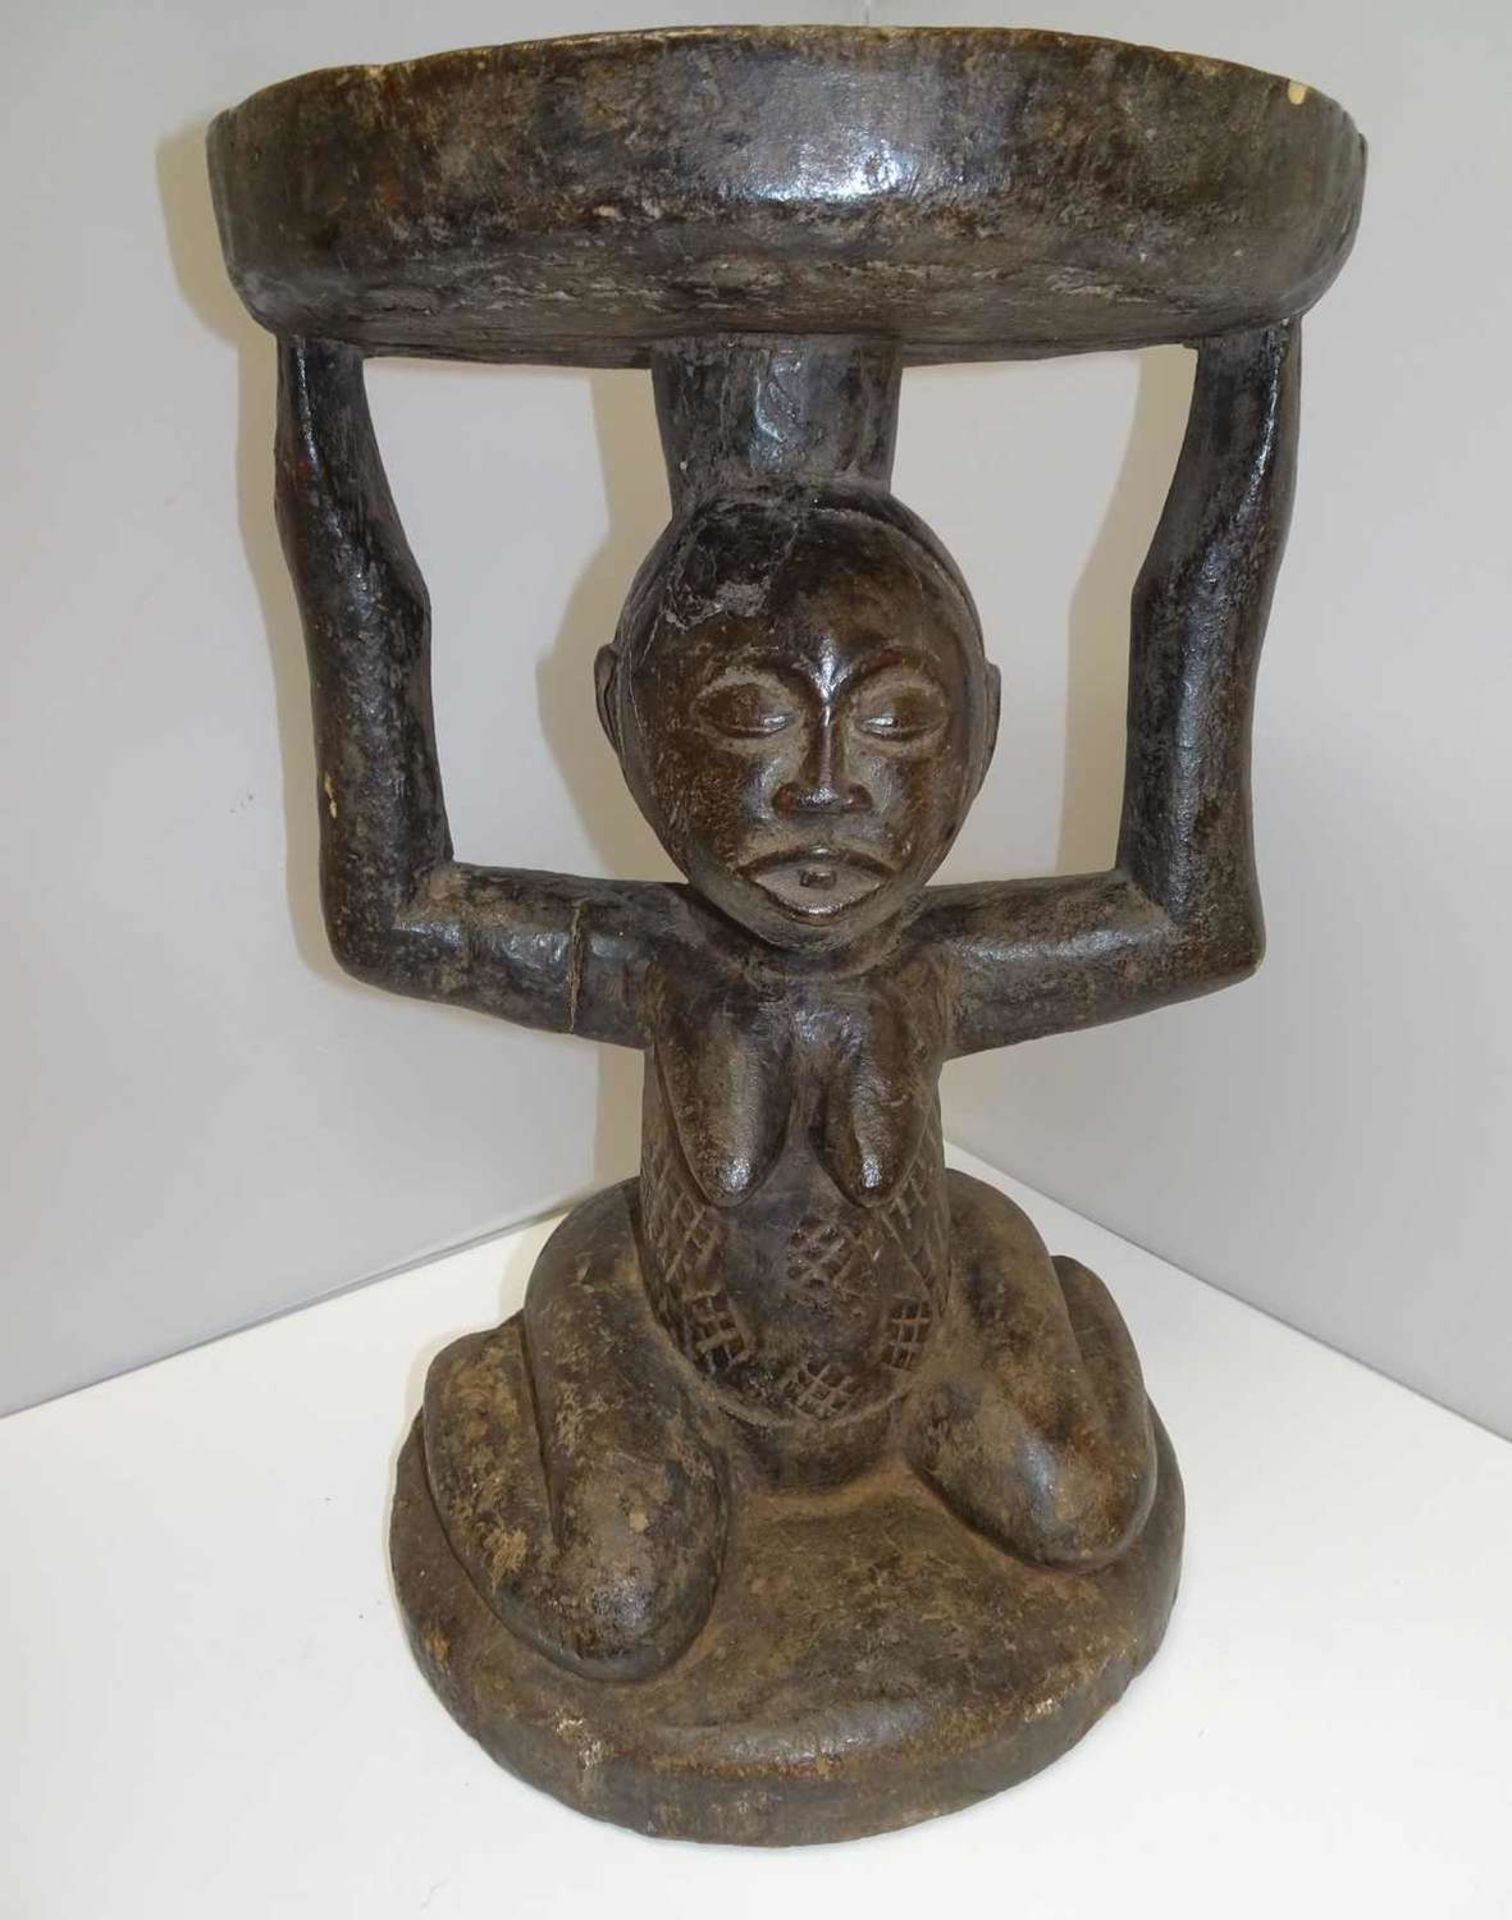 Ritualhocker / Figurenhocker Luba, Dem. Republik Kongo. Schöne Gebrauchspatina. Maße: Höhe ca. 40